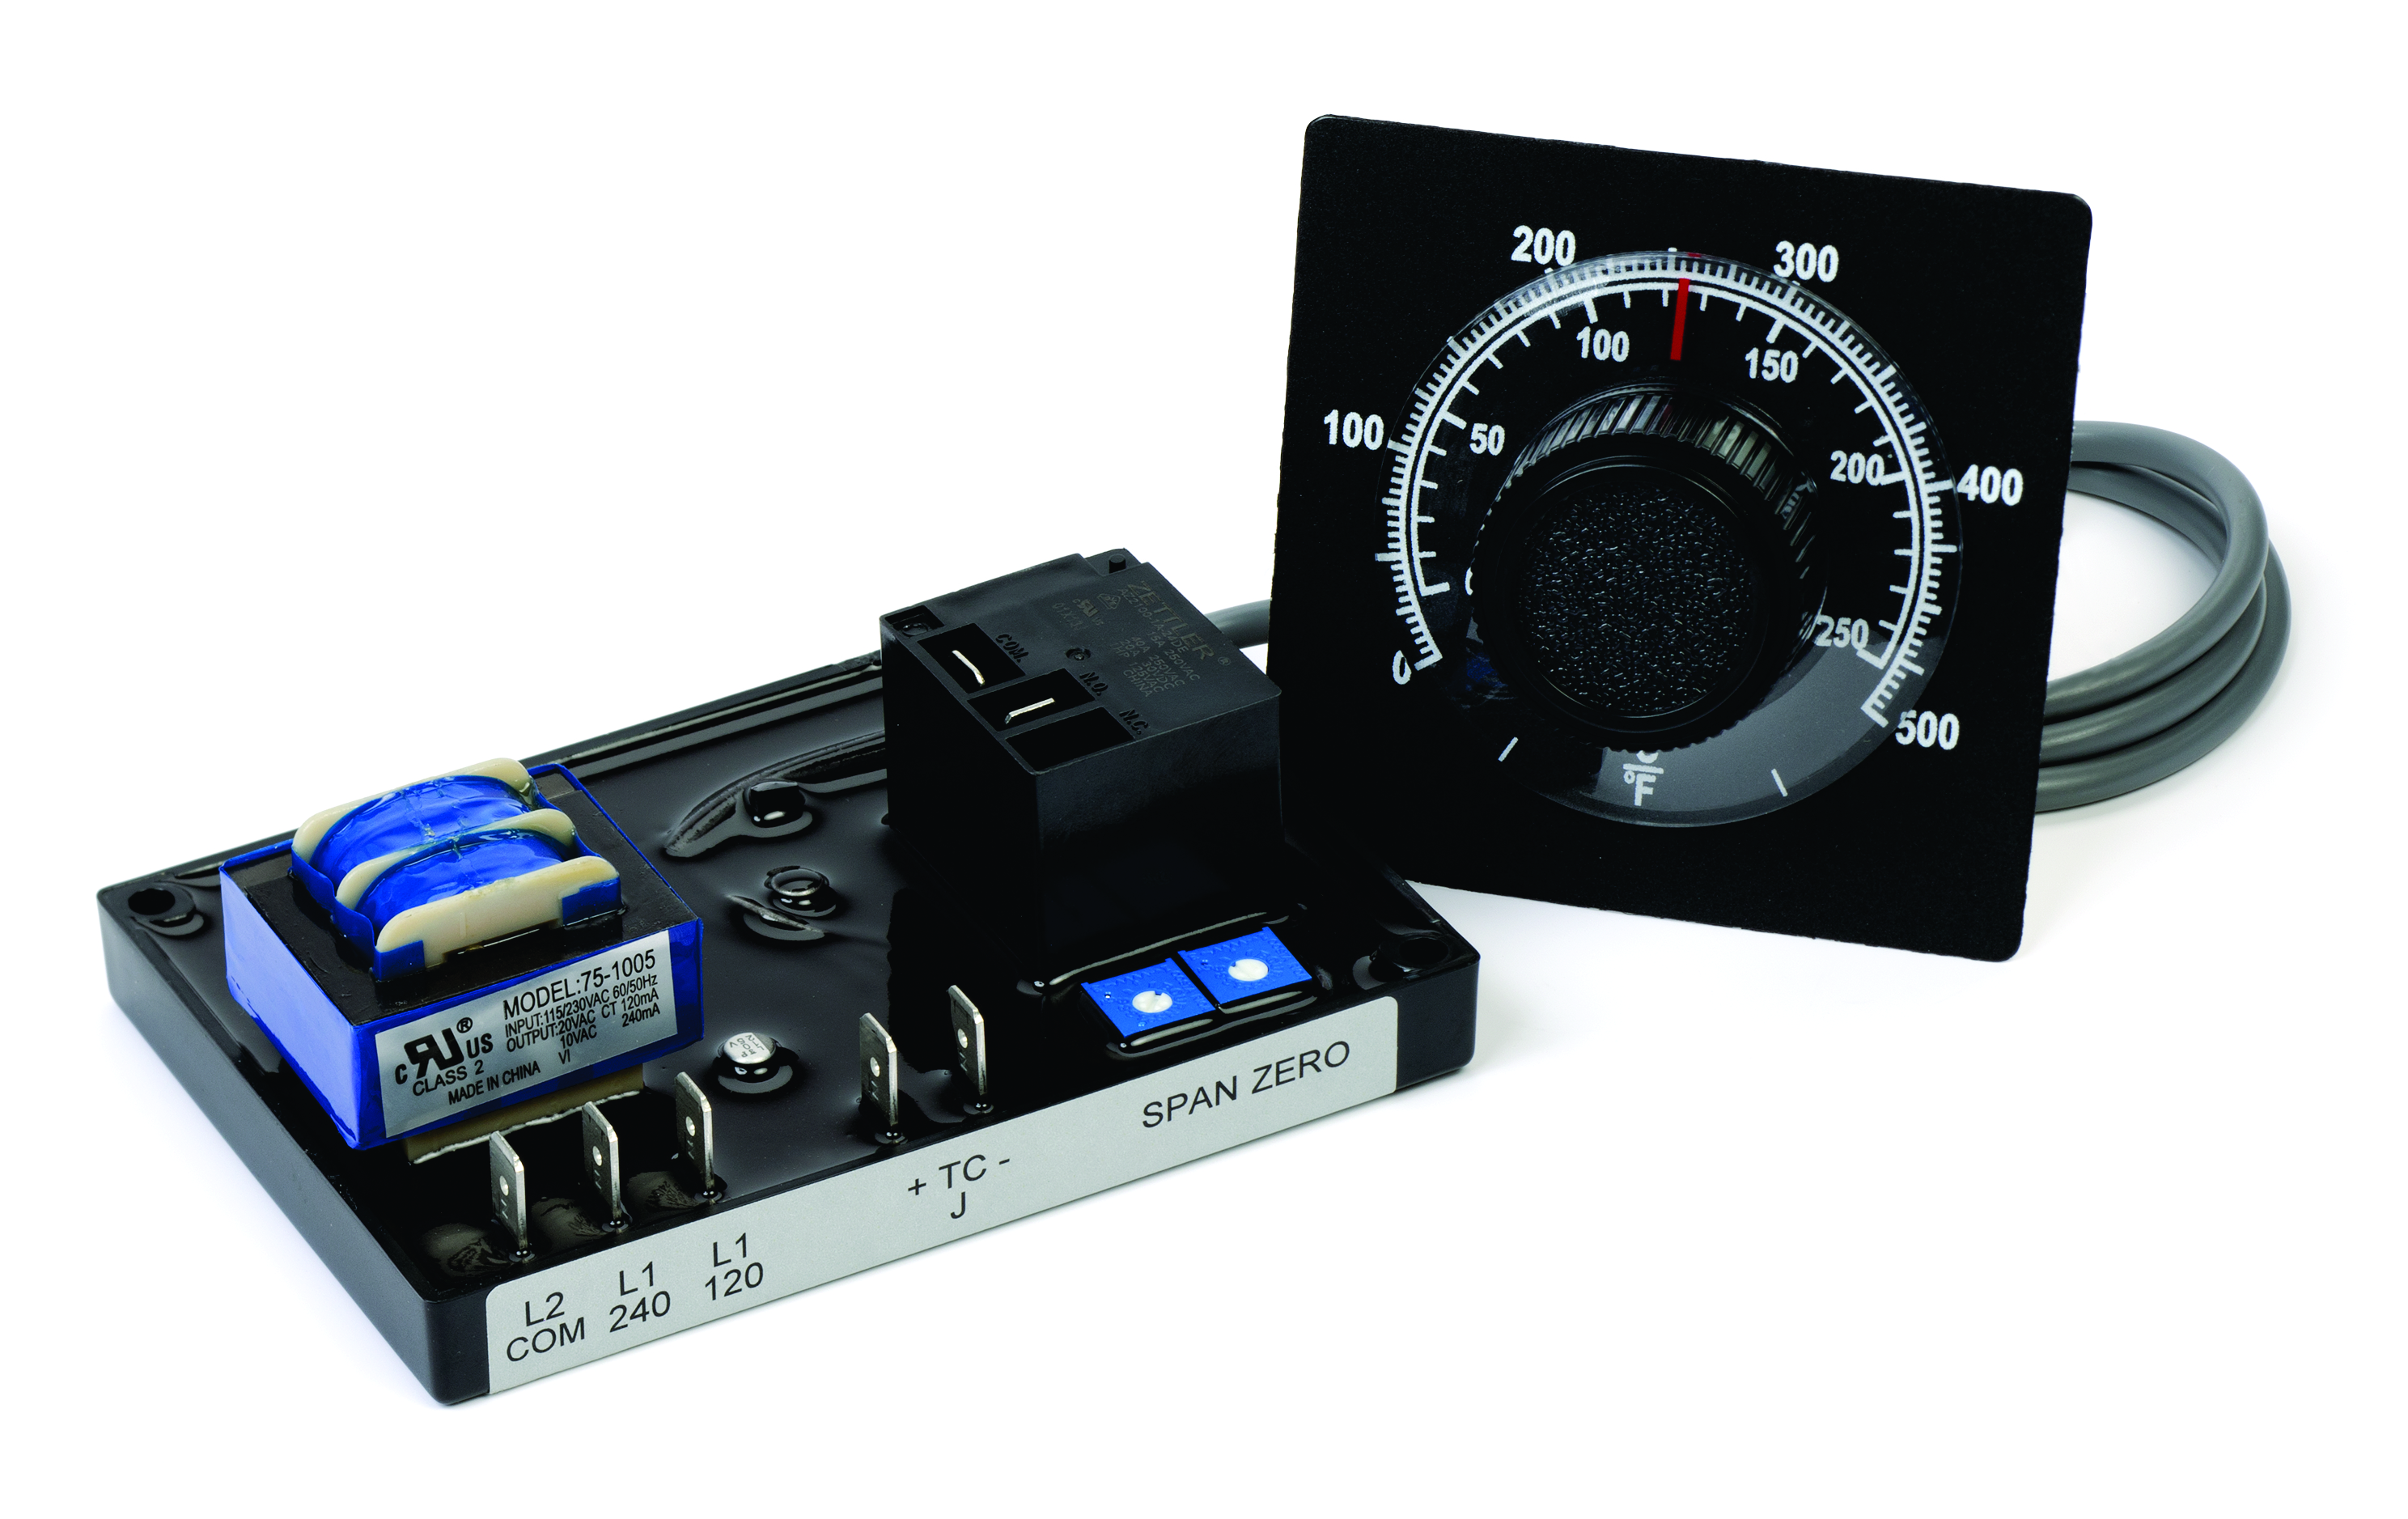 control products inc temperature controller